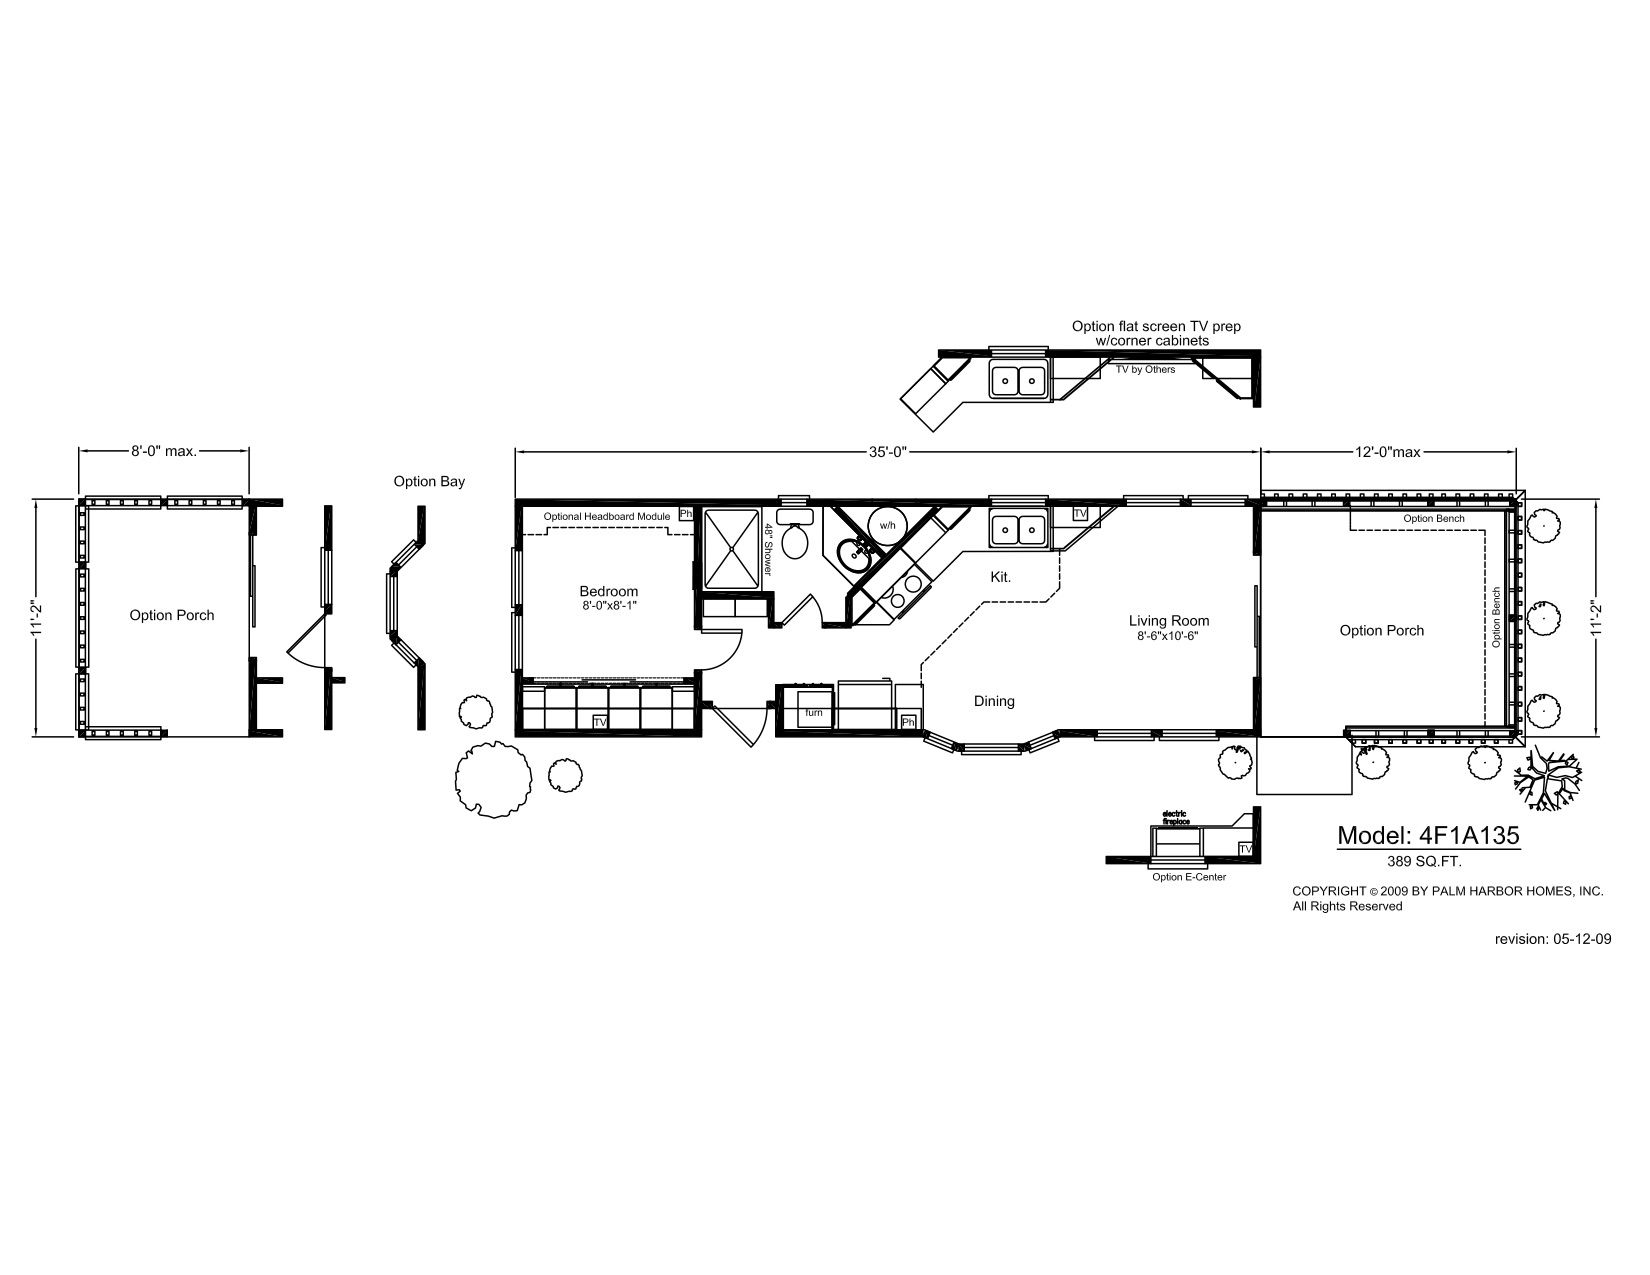 Homes Direct Modular Homes - Model 4F1A135 - Floorplan